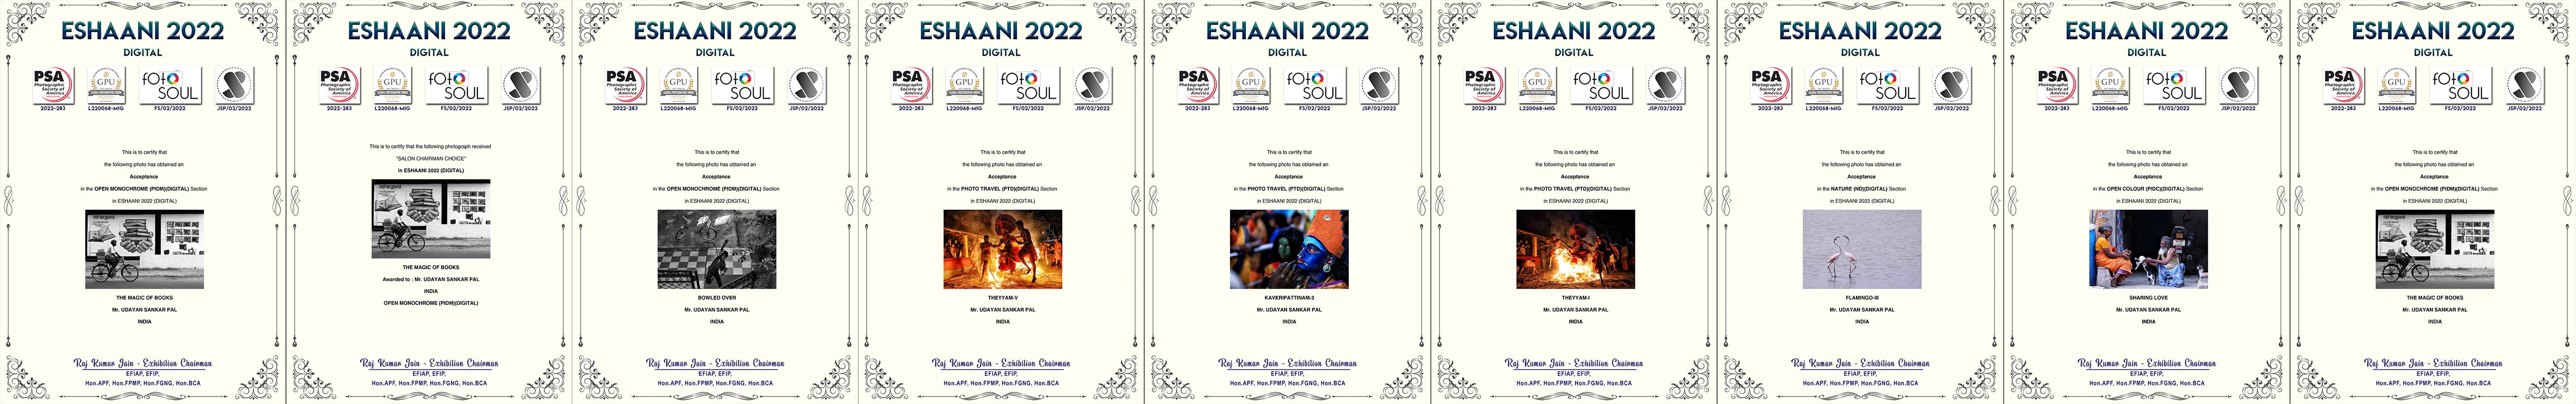 Eshaani-2022